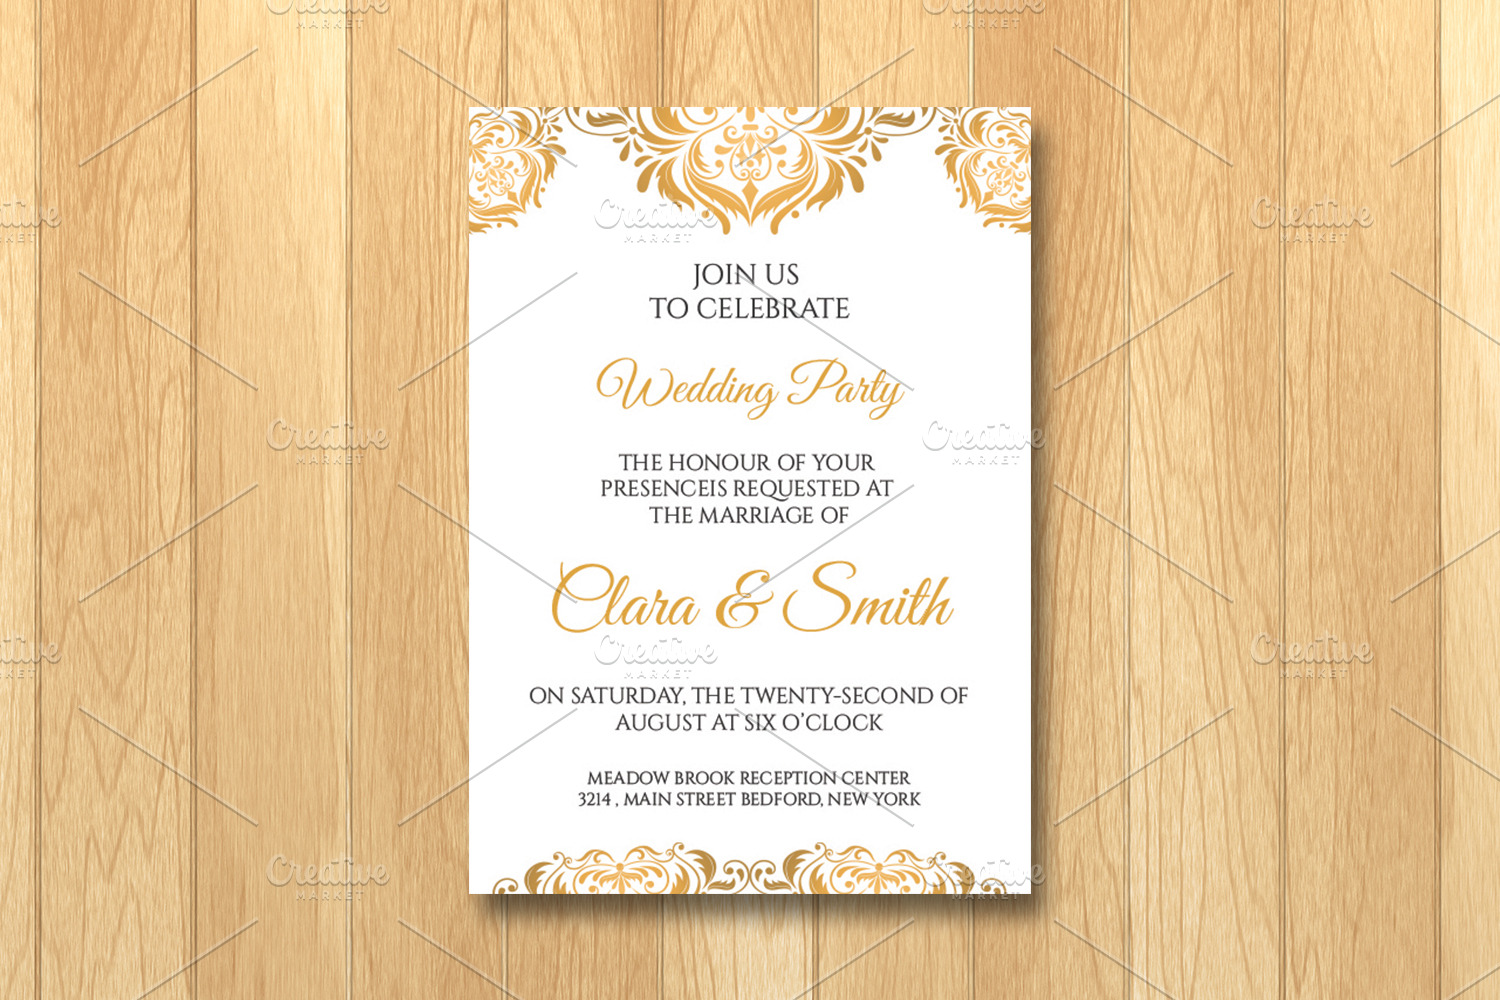 Wedding Invitation Card Template ~ Invitation Templates ~ Creative Market